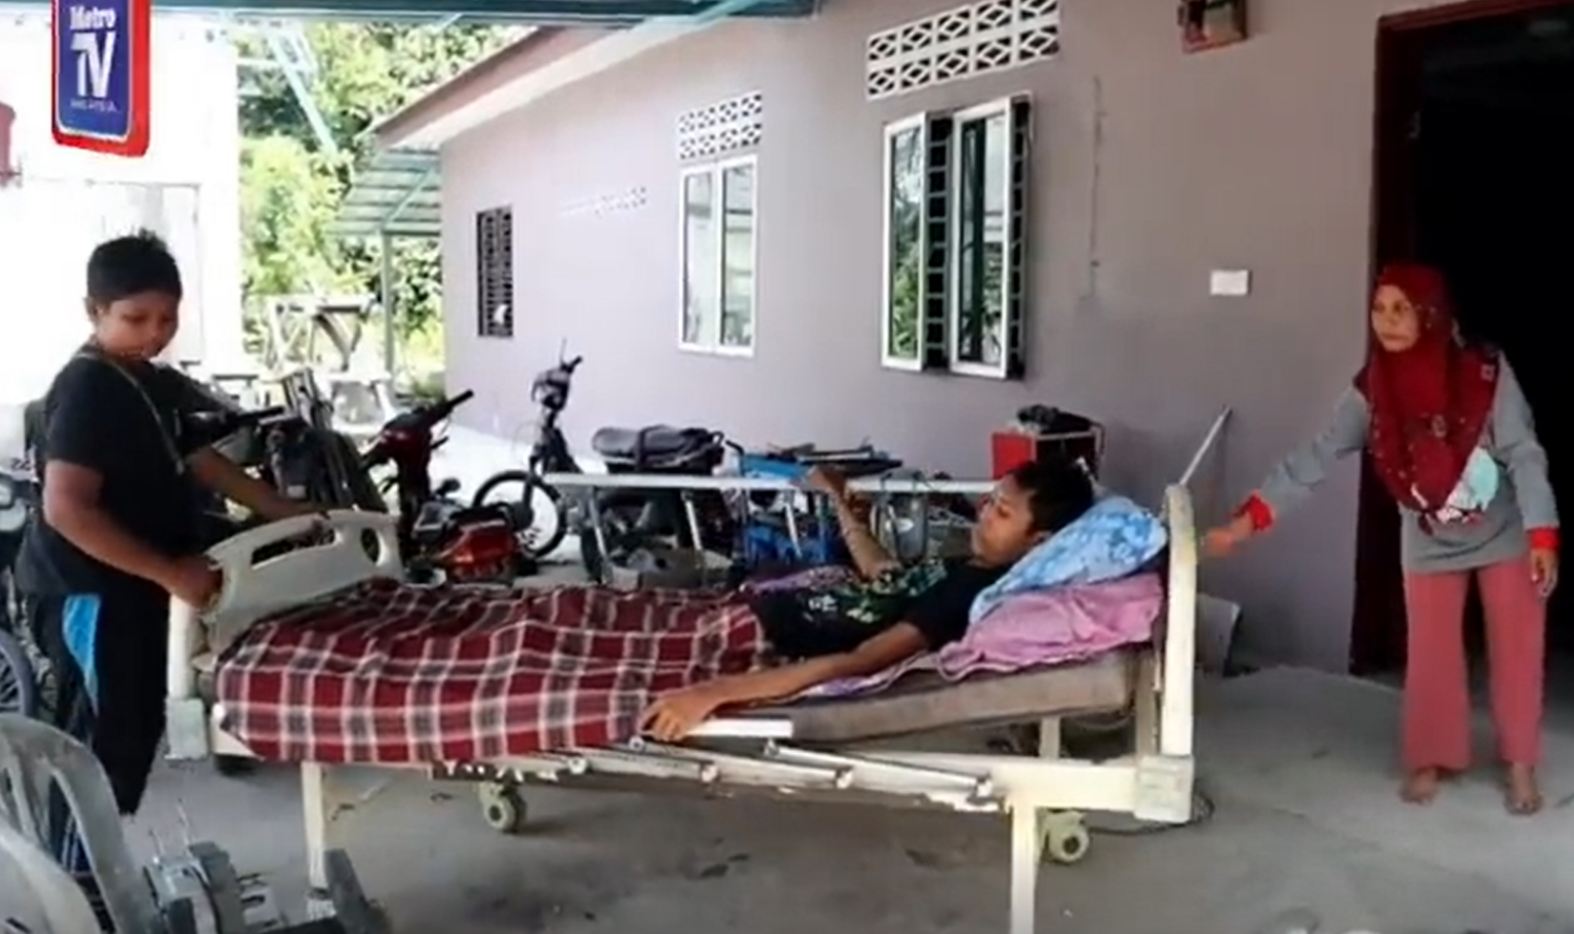 bedridden repairs motorcycle - push bed